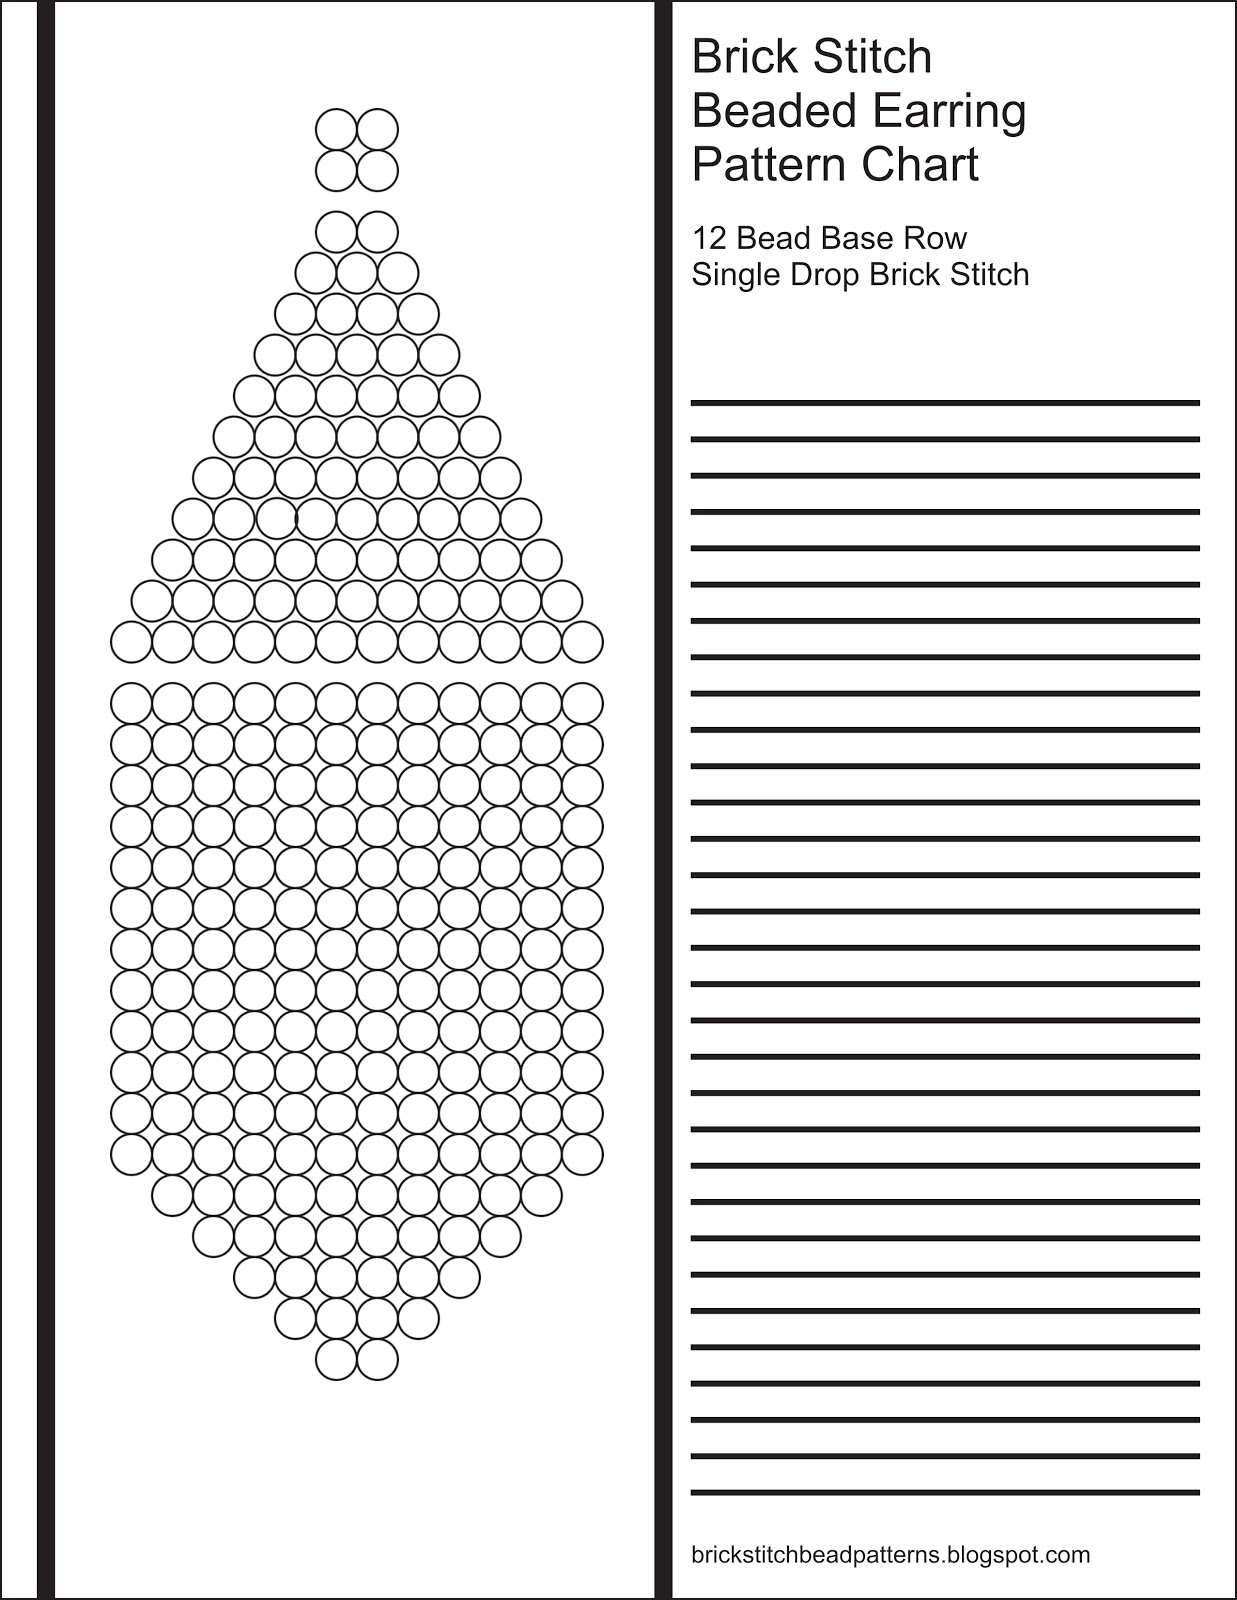 brick-stitch-bead-patterns-journal-12-bead-base-row-blank-round-beaded